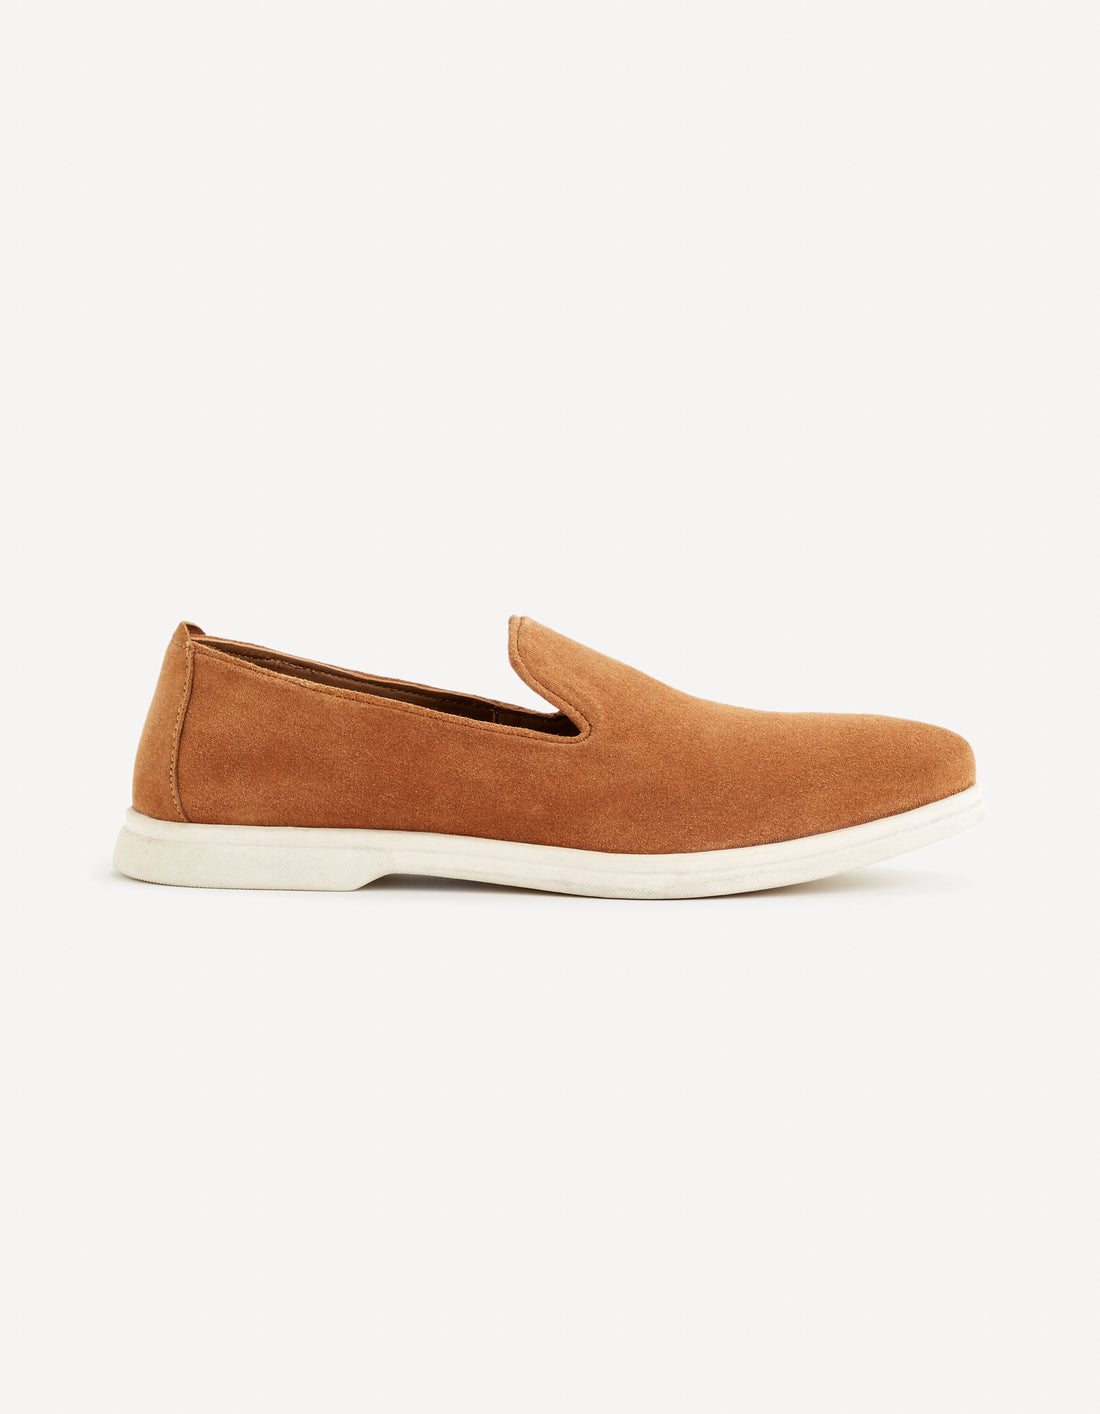 100% Leather Loafers - Camel_DYMOCA_CAMEL_01